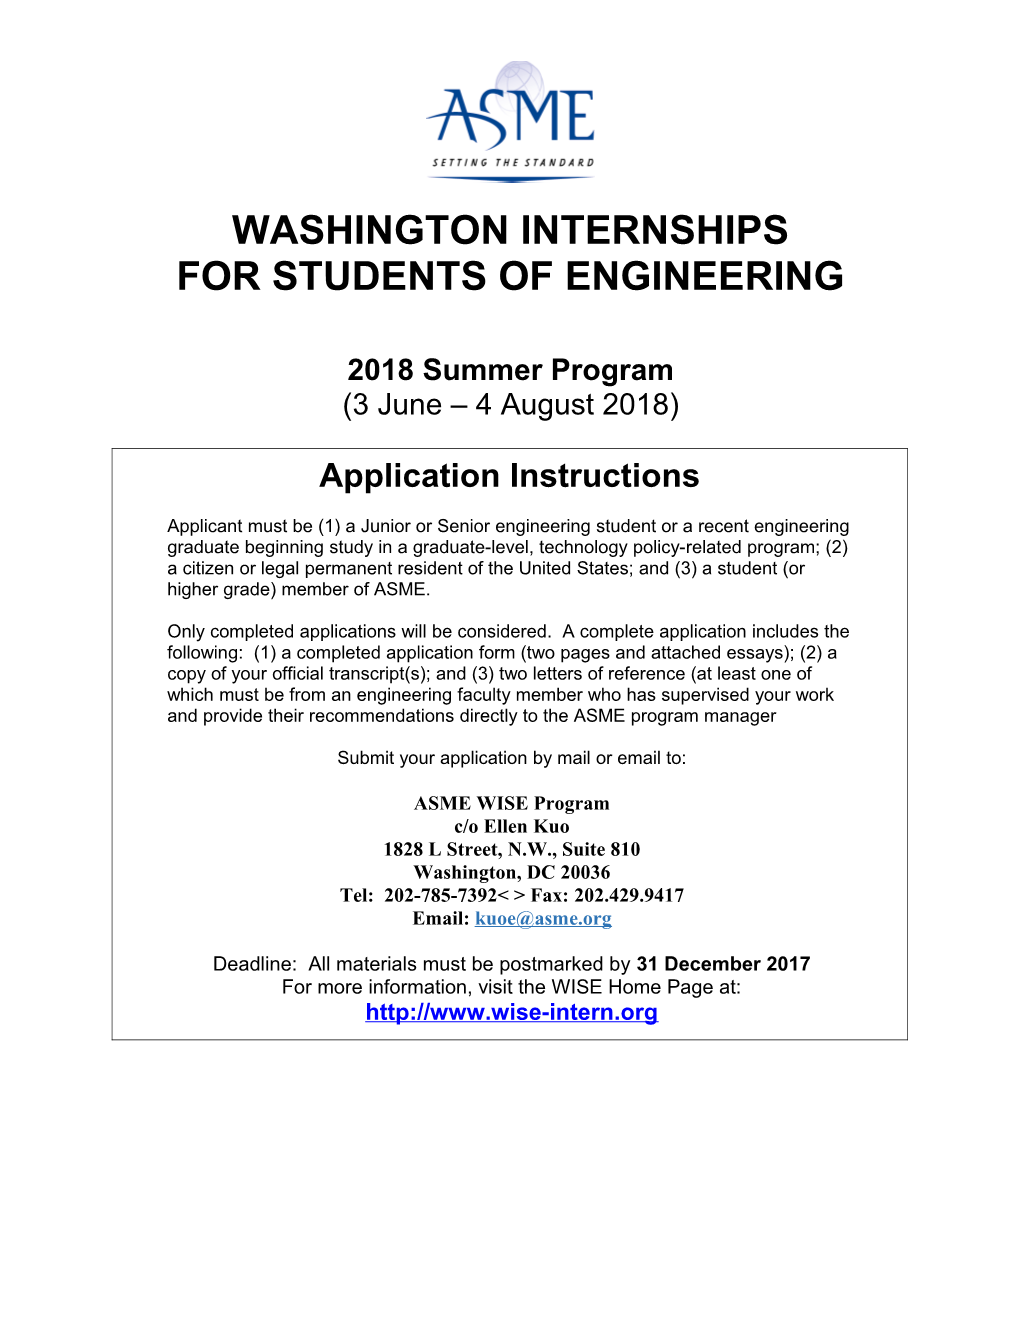 Washington Internships for Students of Engineering